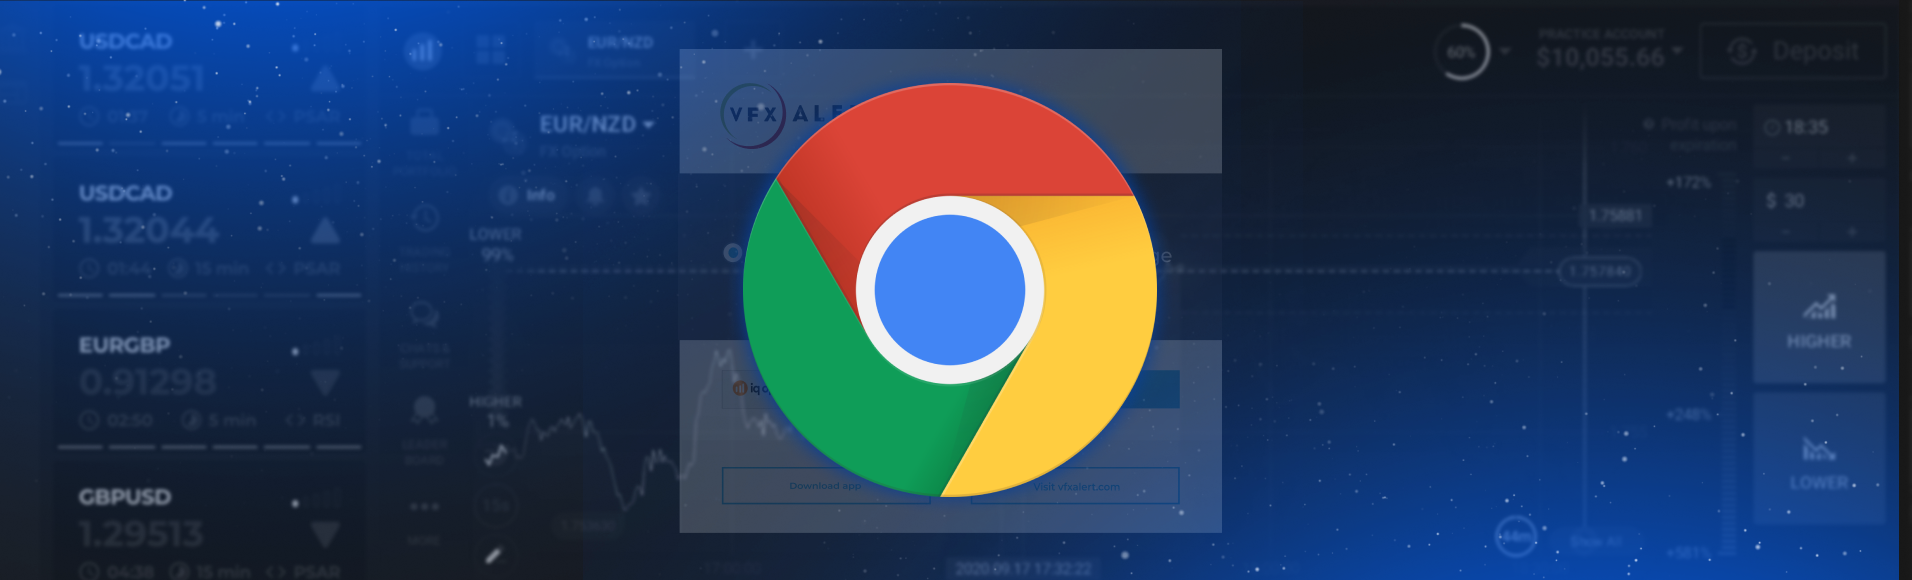 Señales vfxAlert en el navegador Chrome